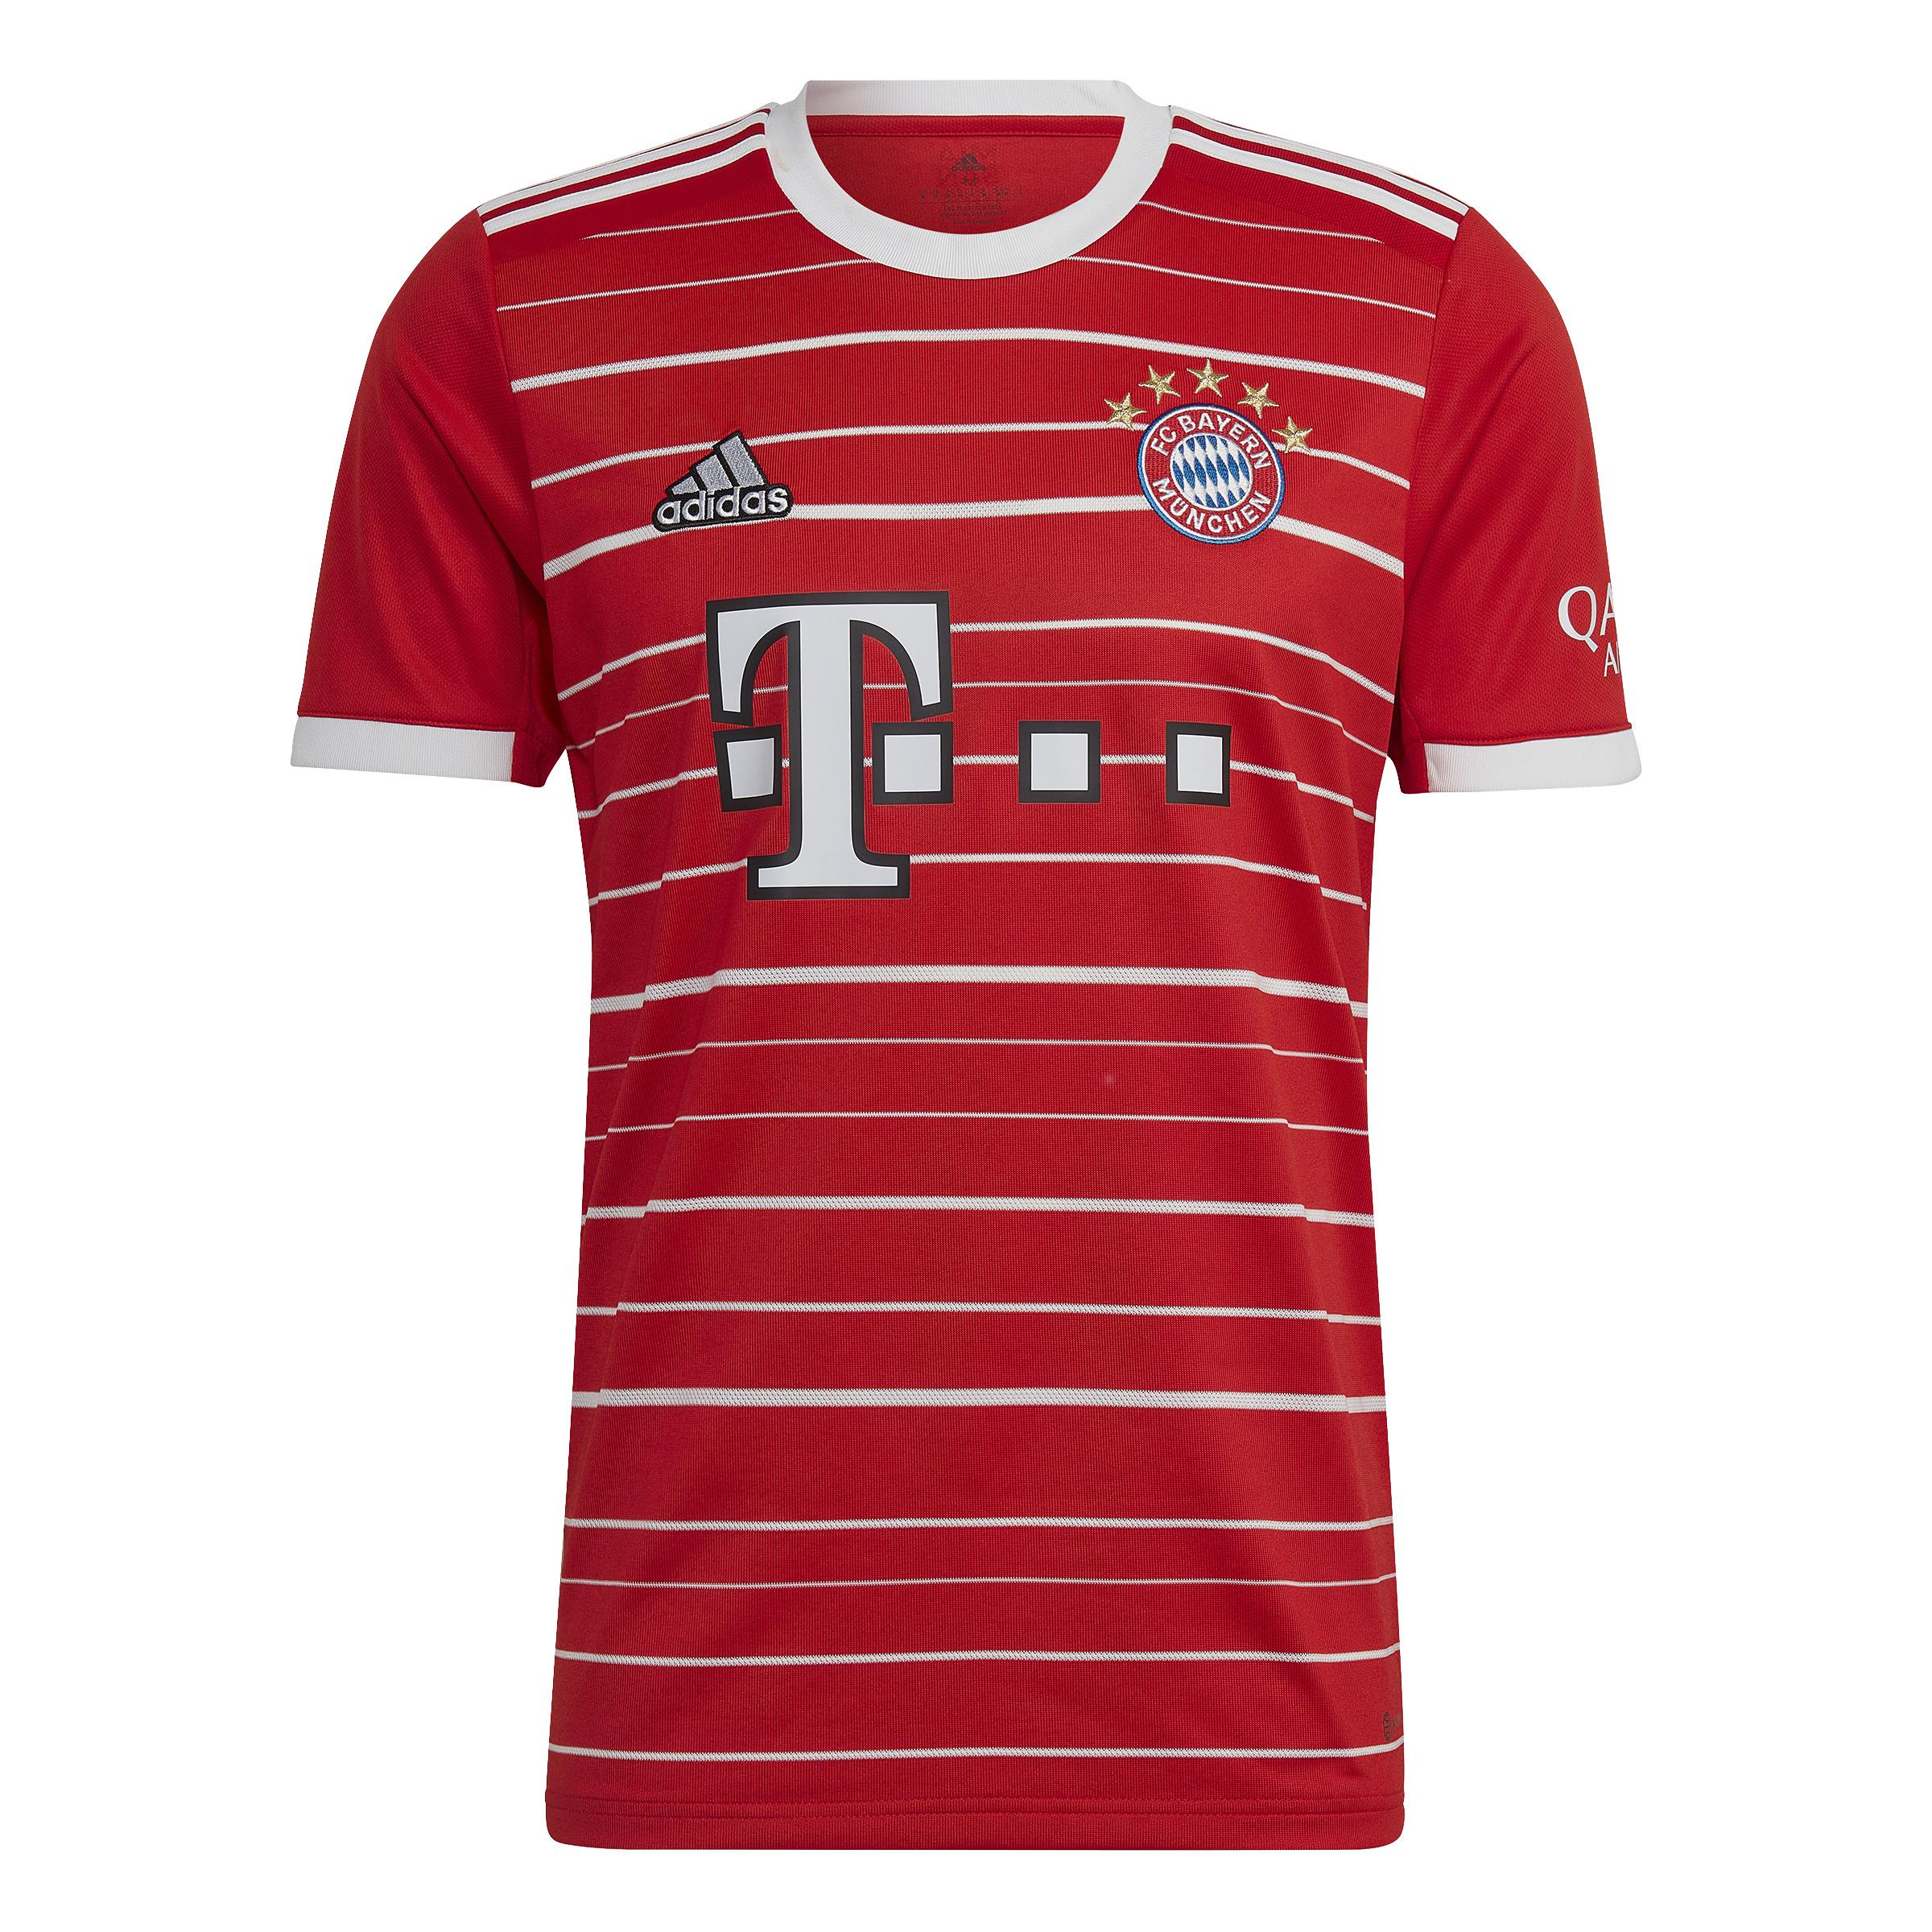 Adidas Shirt Home Bayern Monaco   22/23